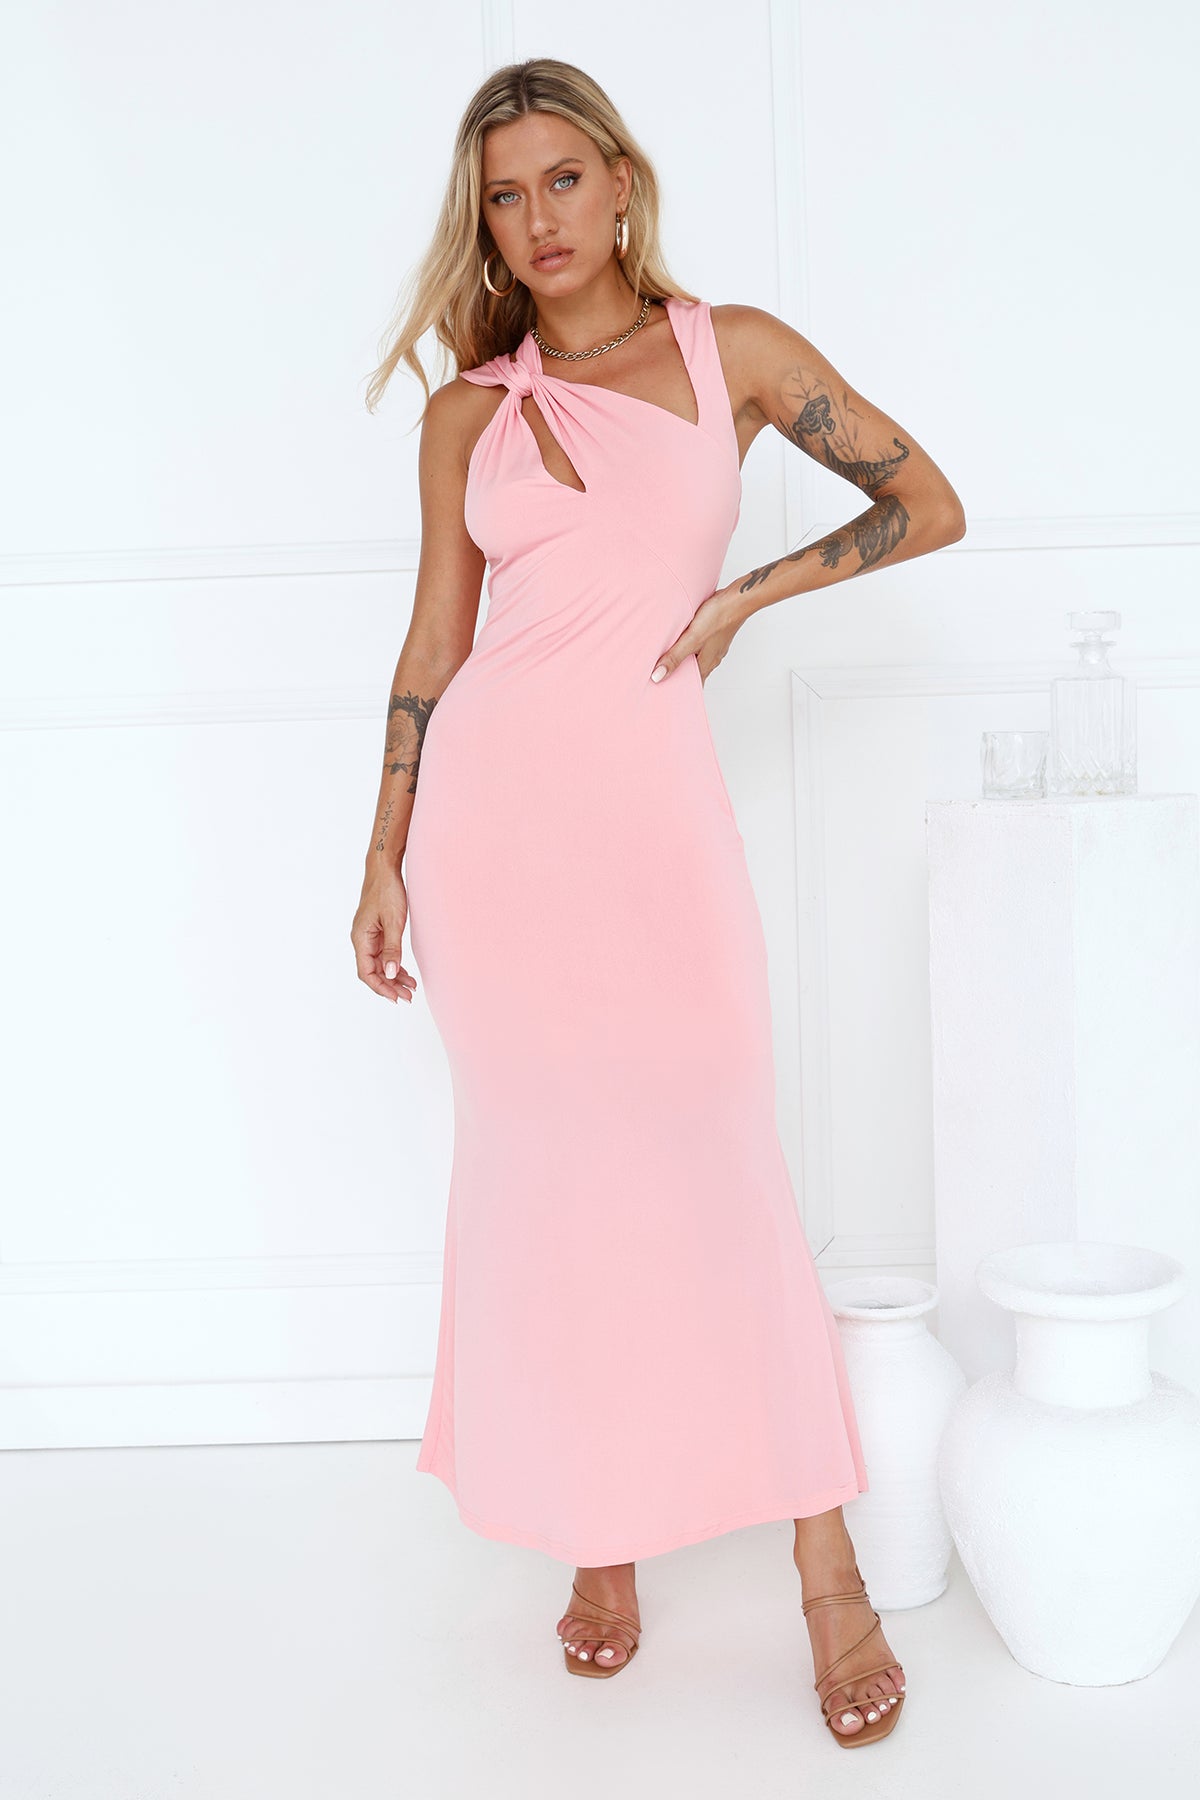 Shop Formal Dress - Chic Taste Maxi Dress Pink secondary image